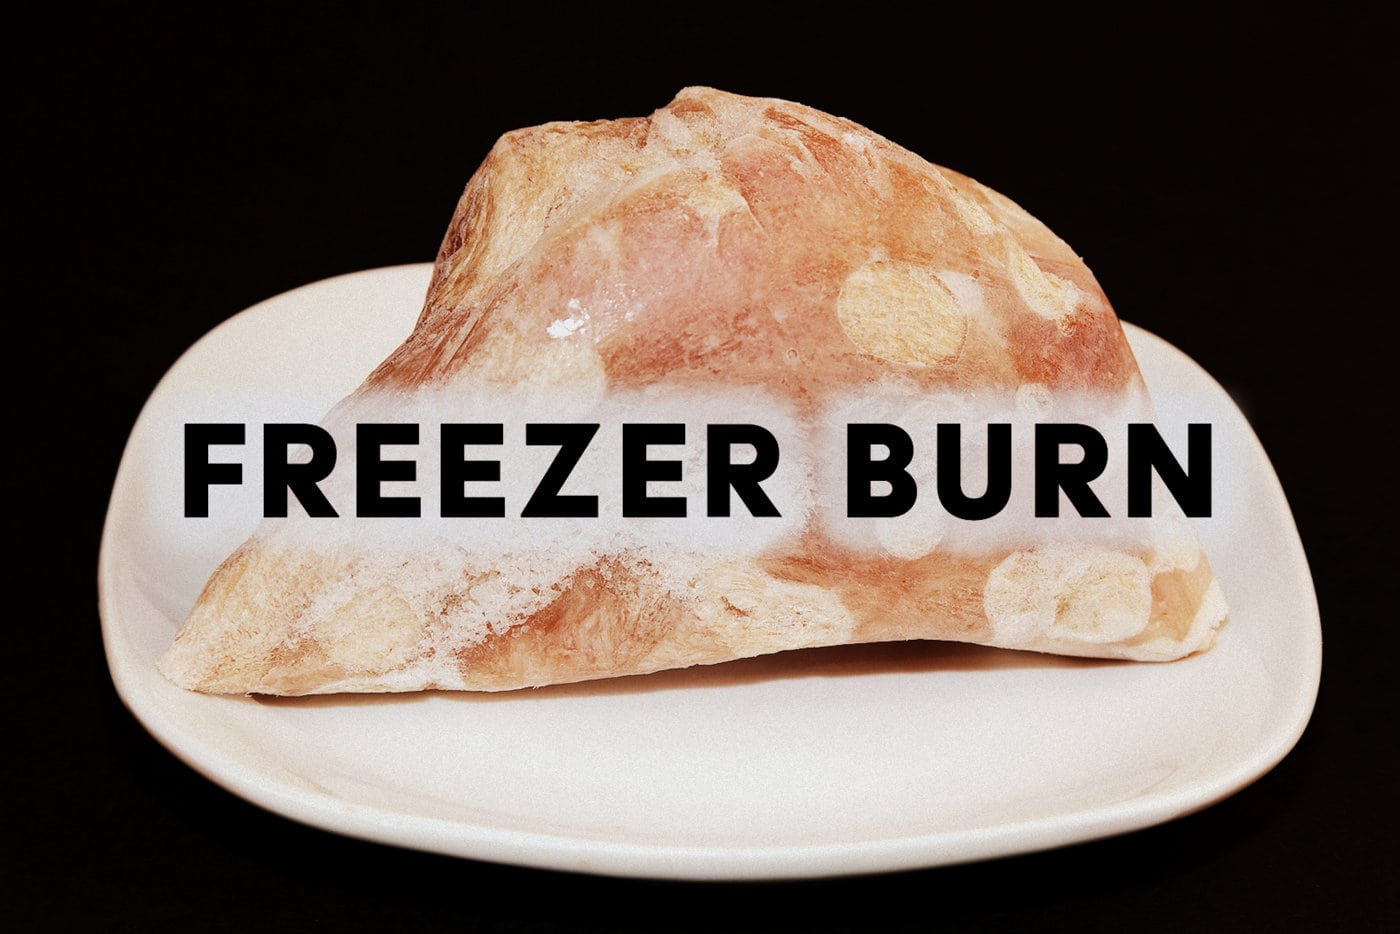 Freezer burn on turkey